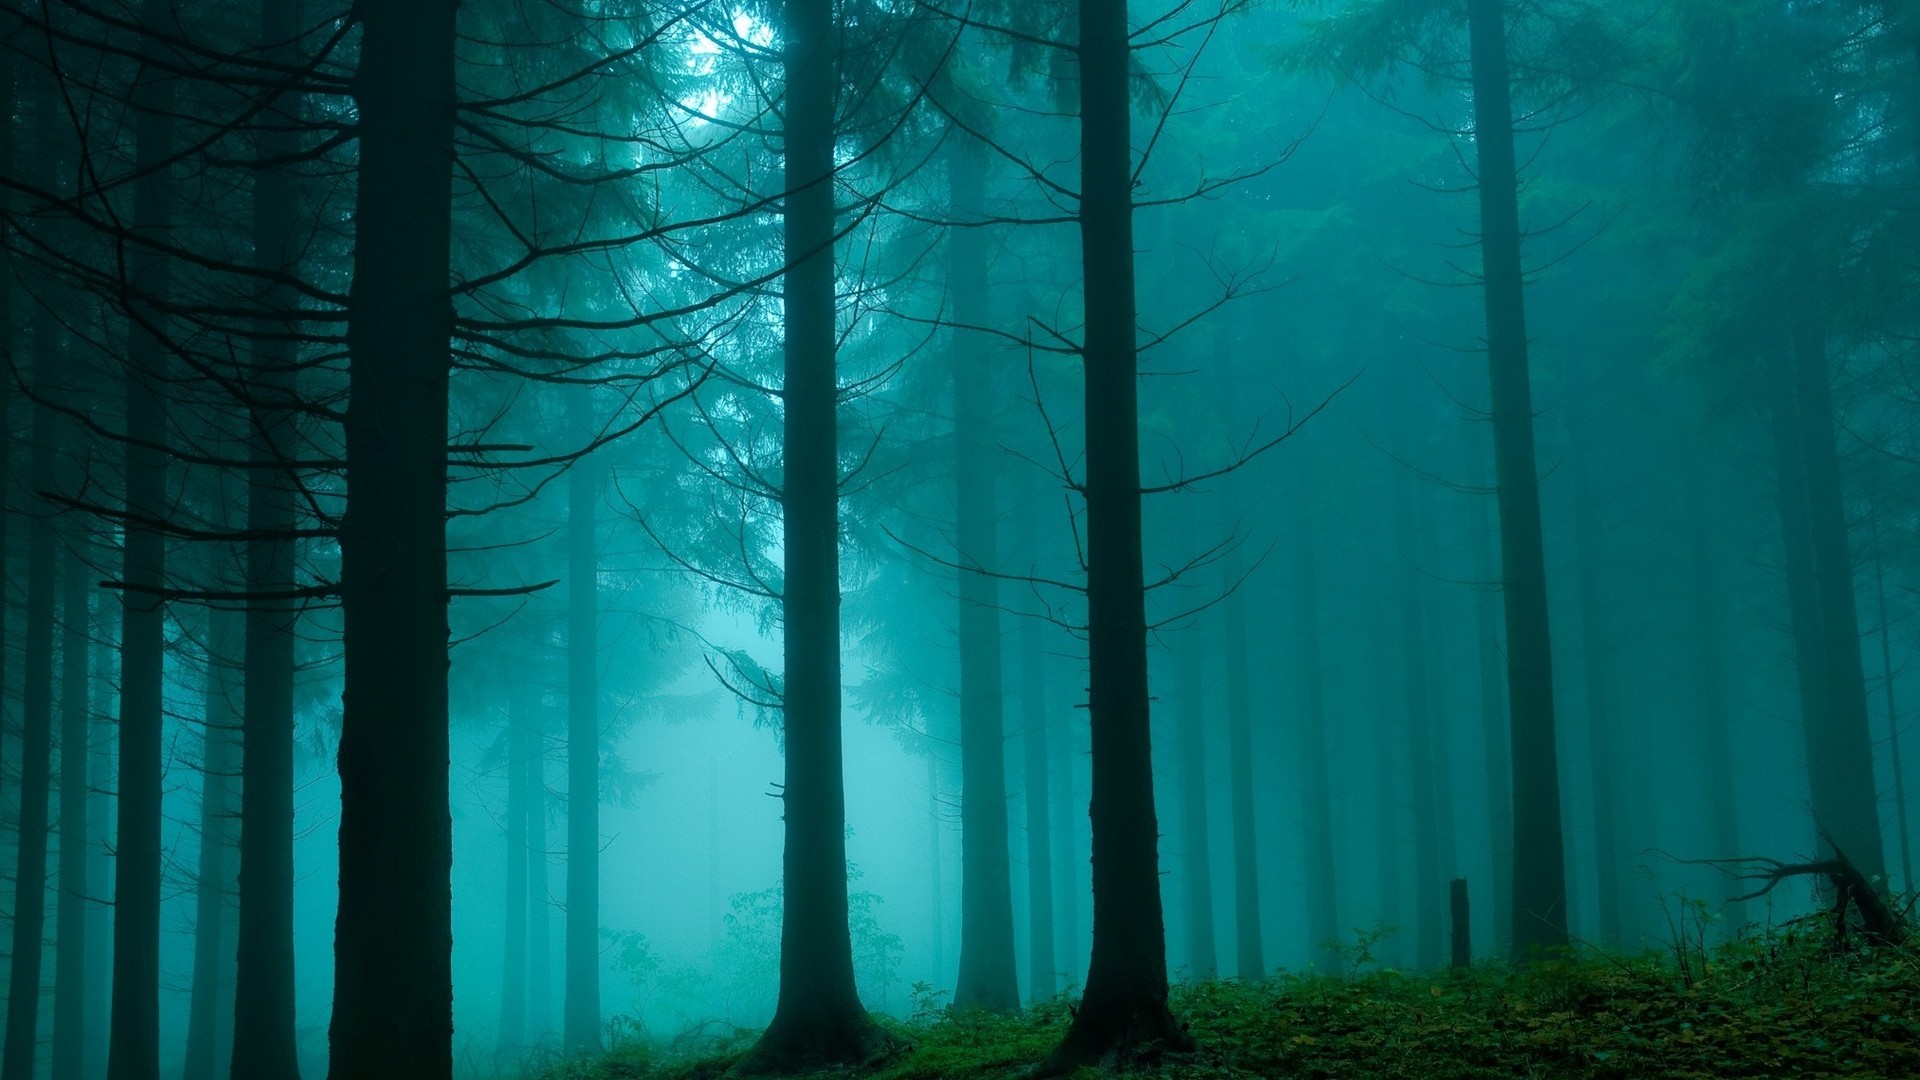 General 1920x1080 landscape trees forest dark nature teal turquoise mist